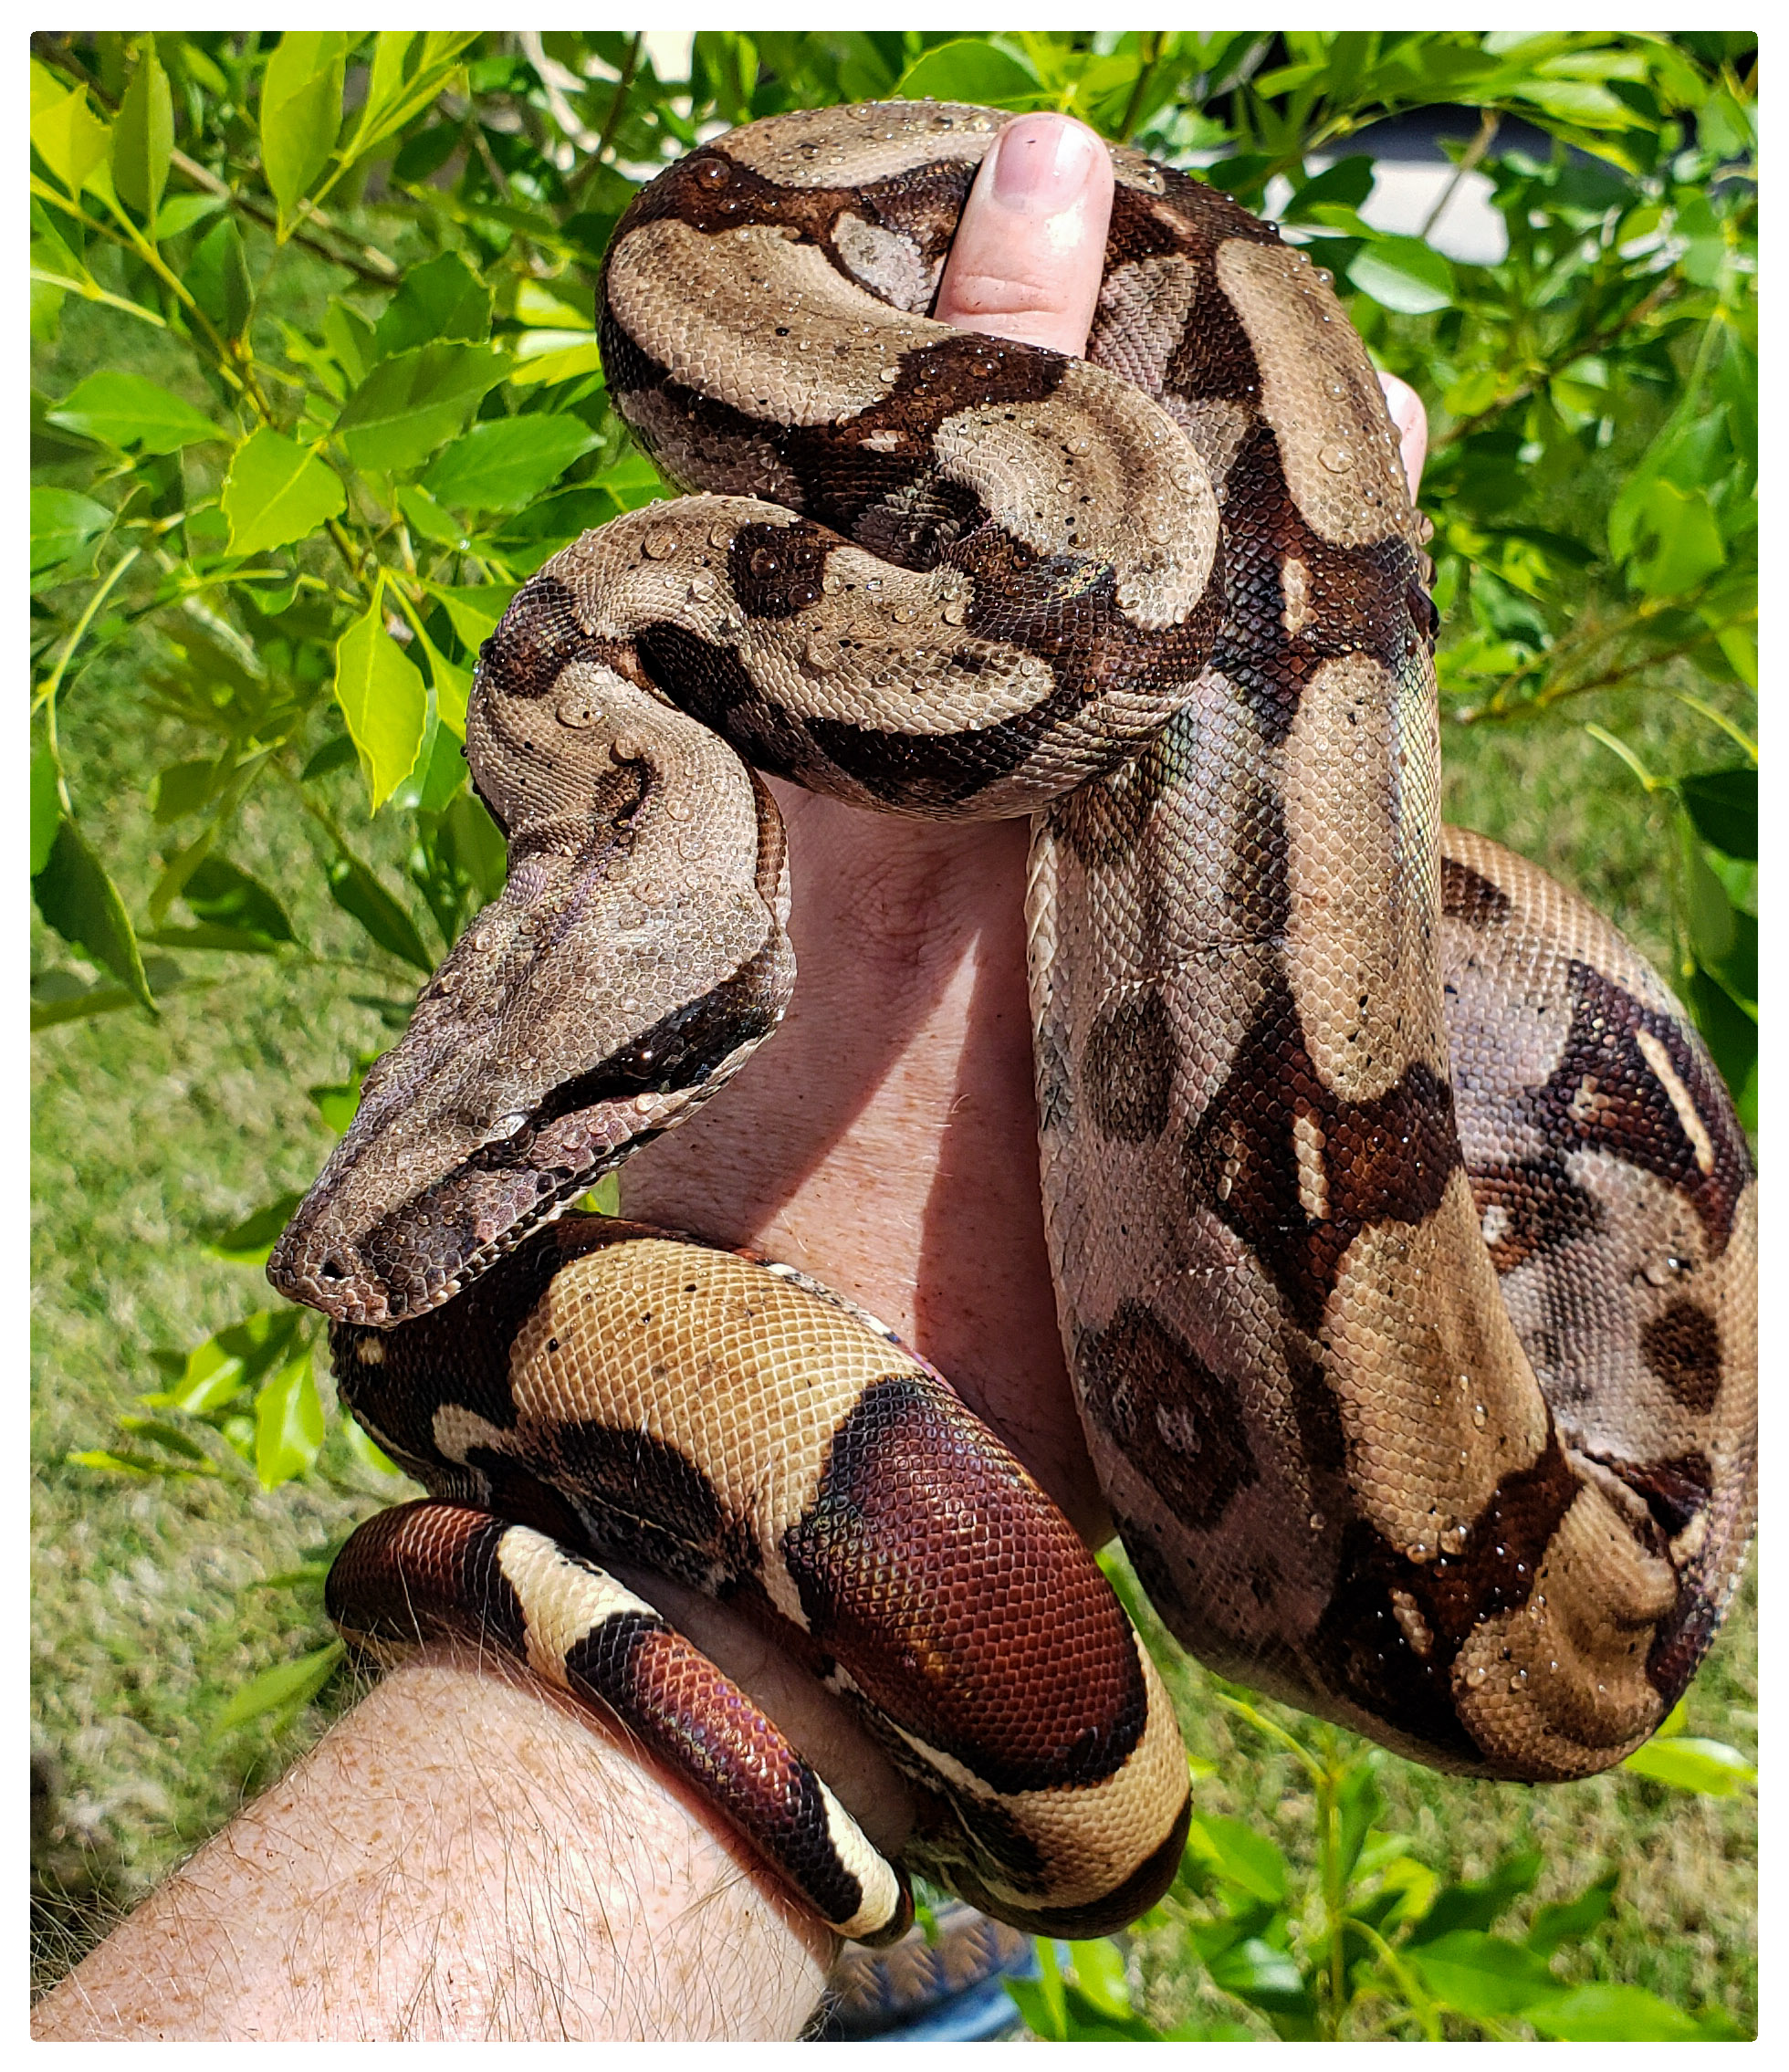 Boa Constrictor developing white spots in color? - Boa Constrictors -  MorphMarket Reptile Community